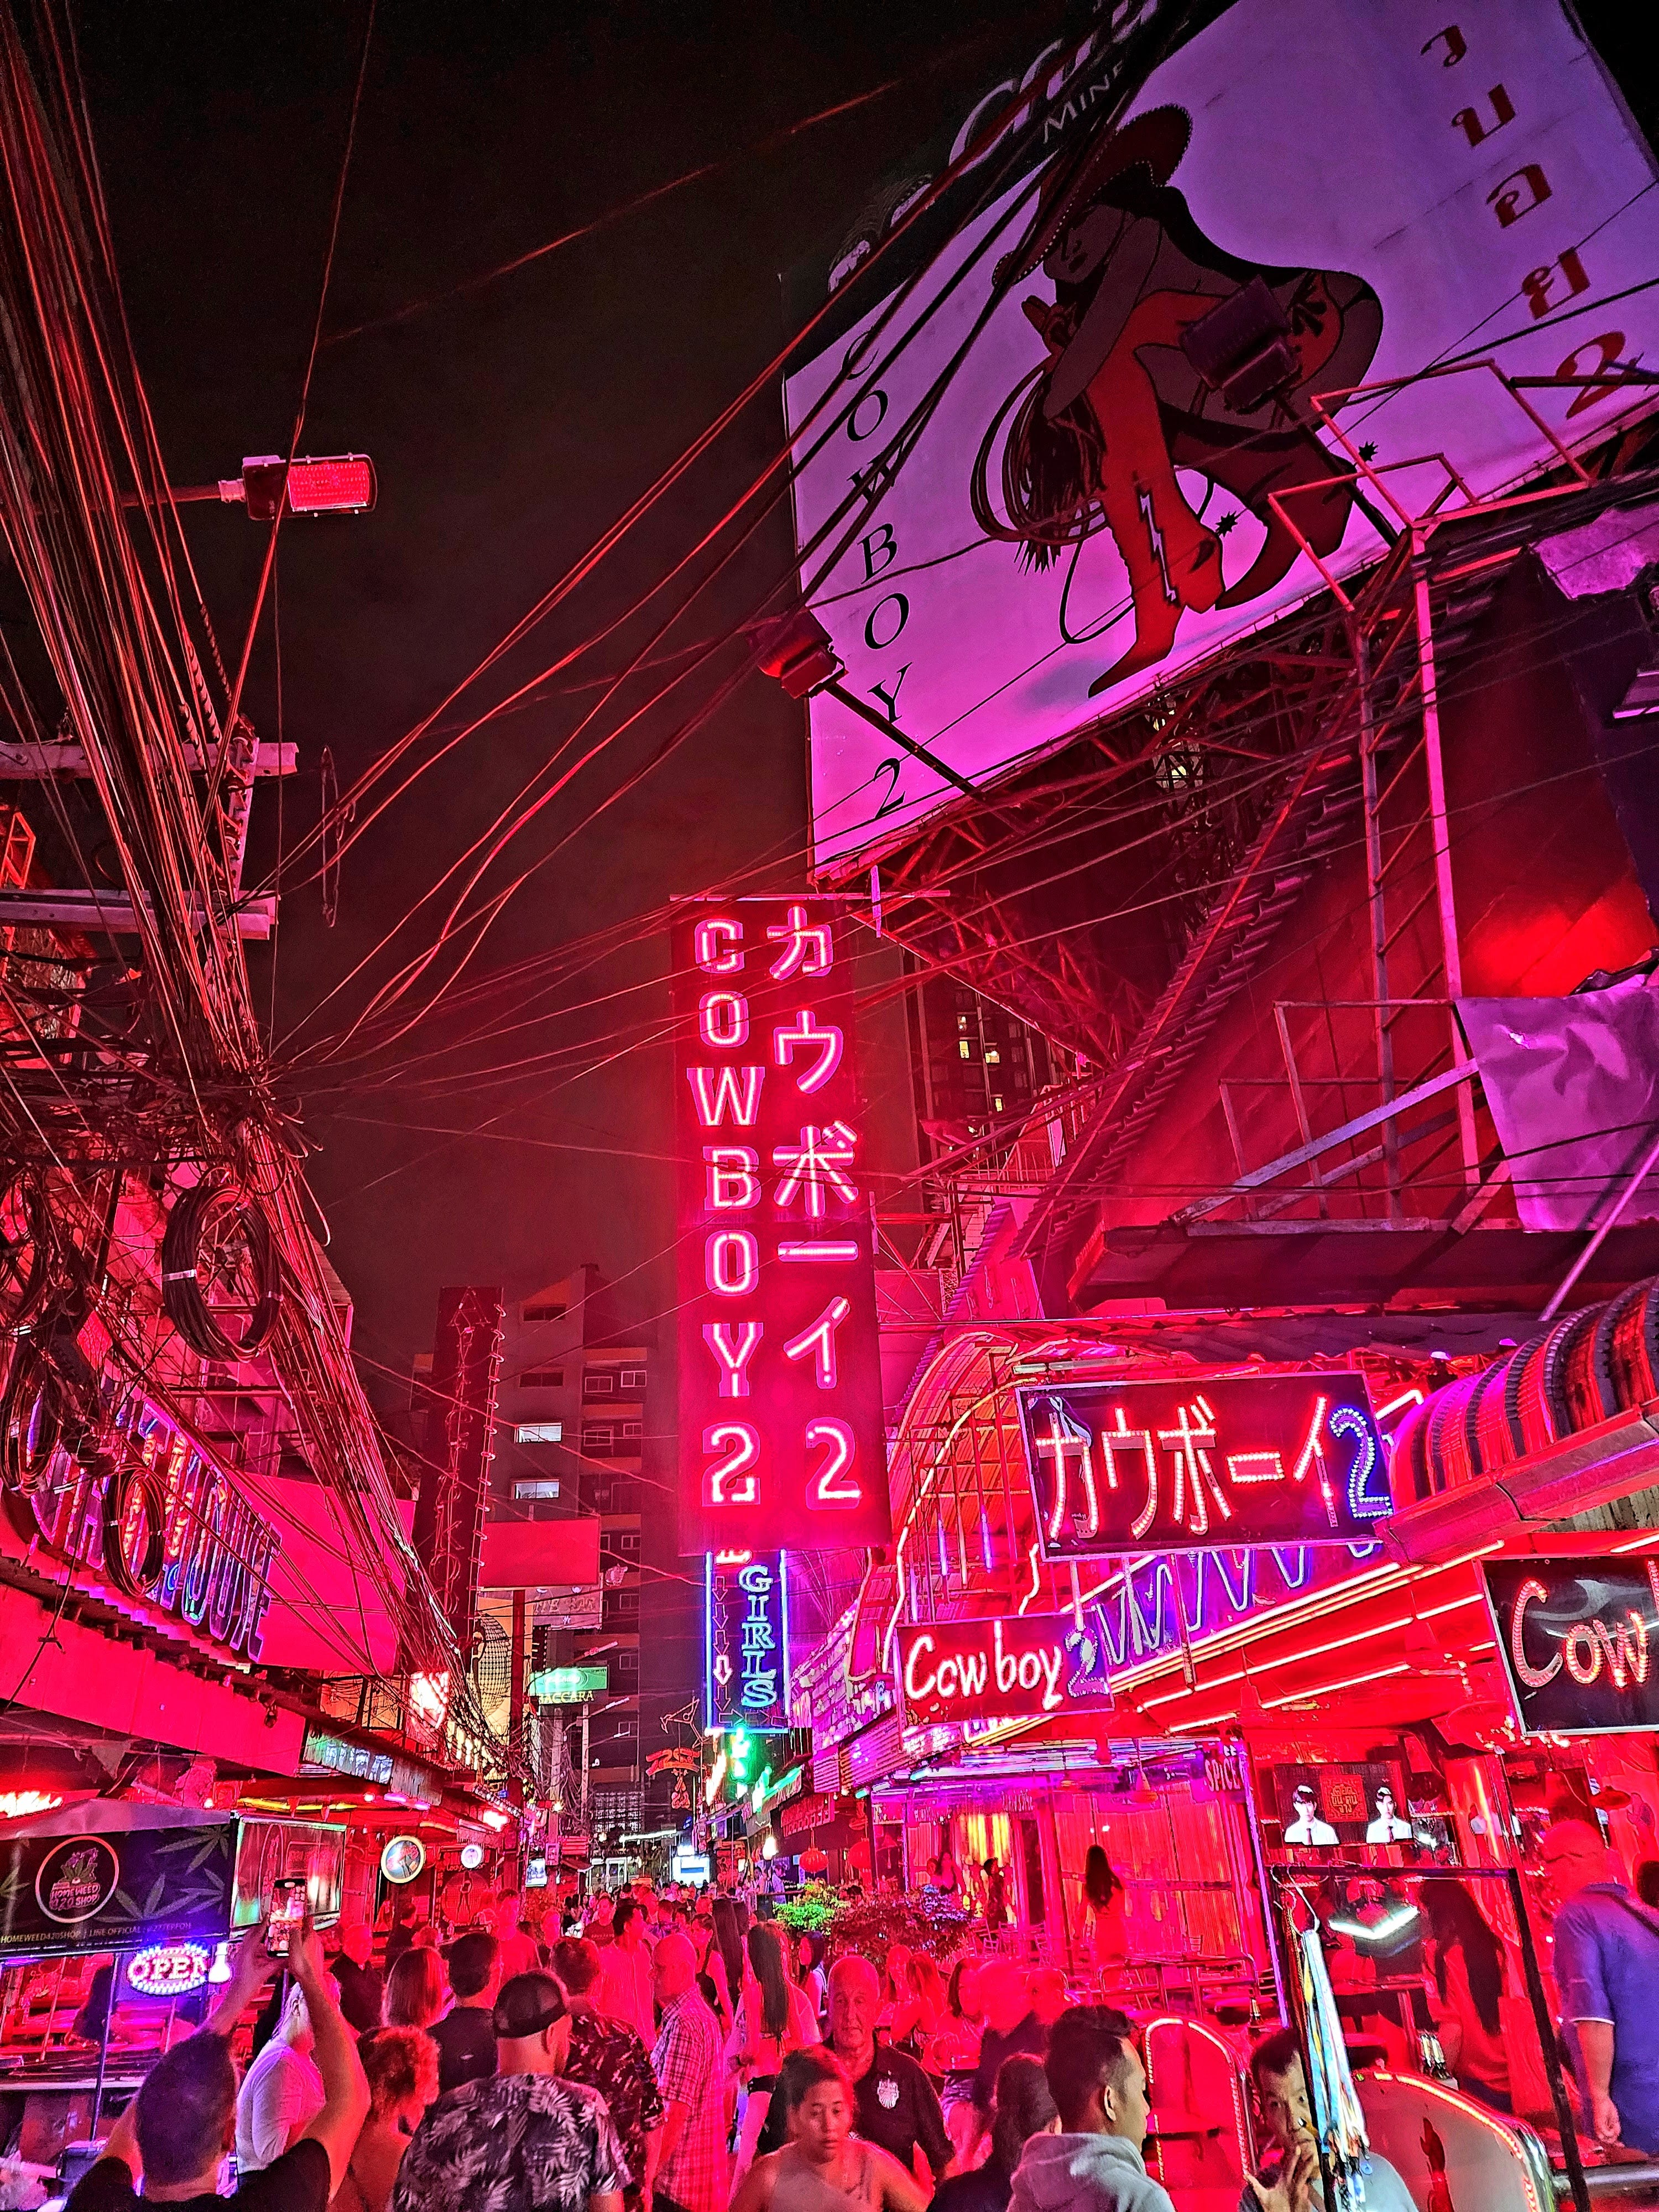 soi-cowboy-street-bangkok